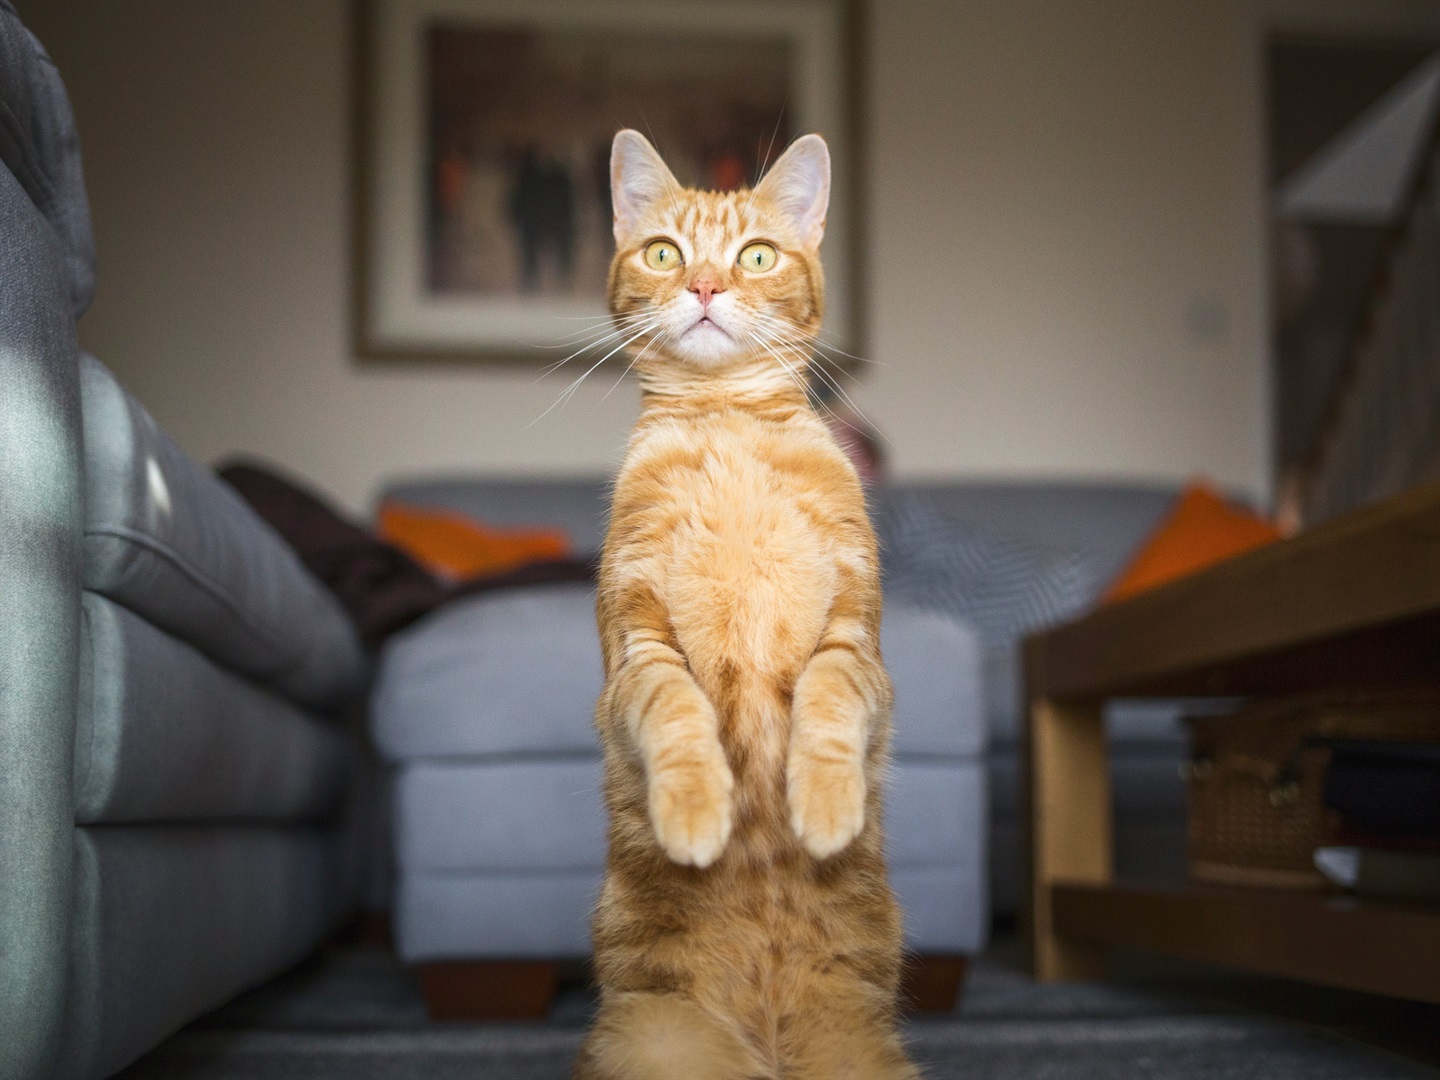 Ginger domestic cat